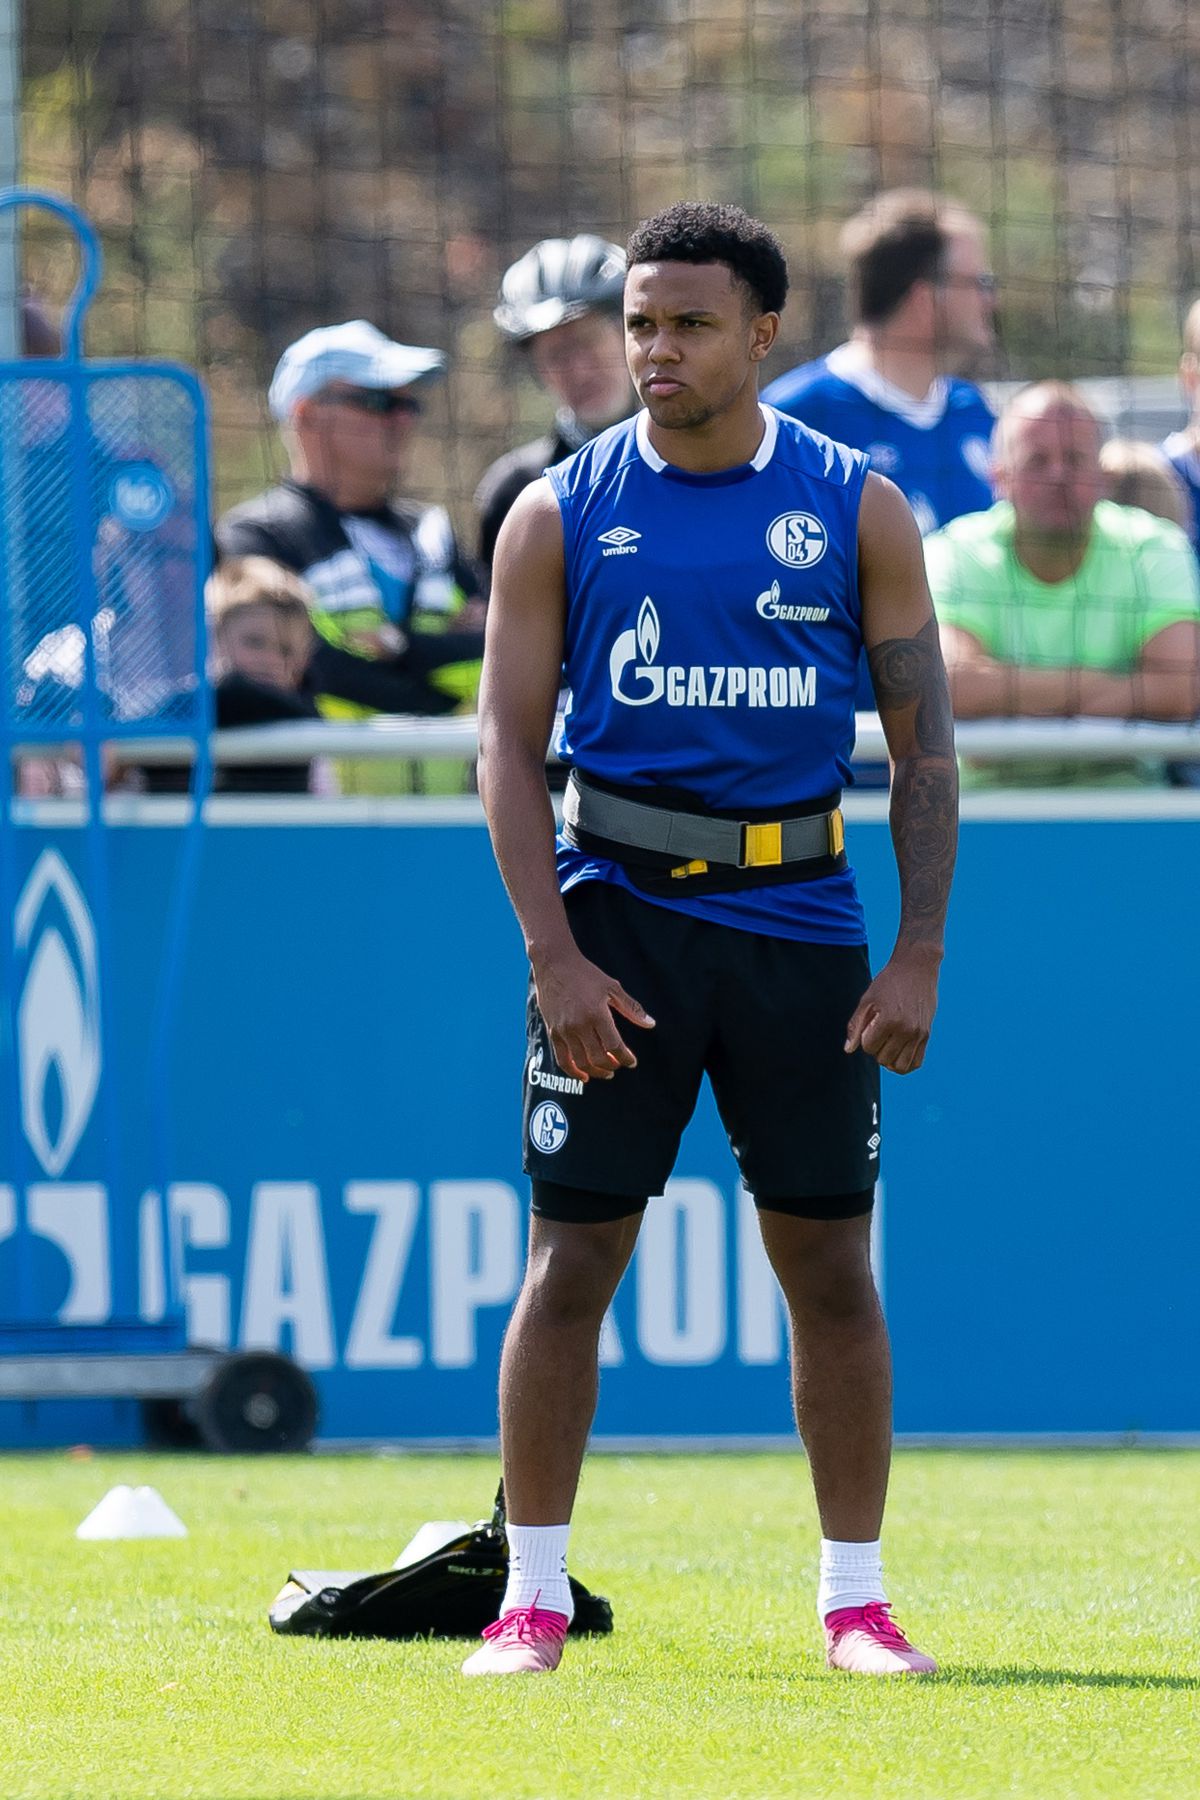 Schalke 04 Training Session